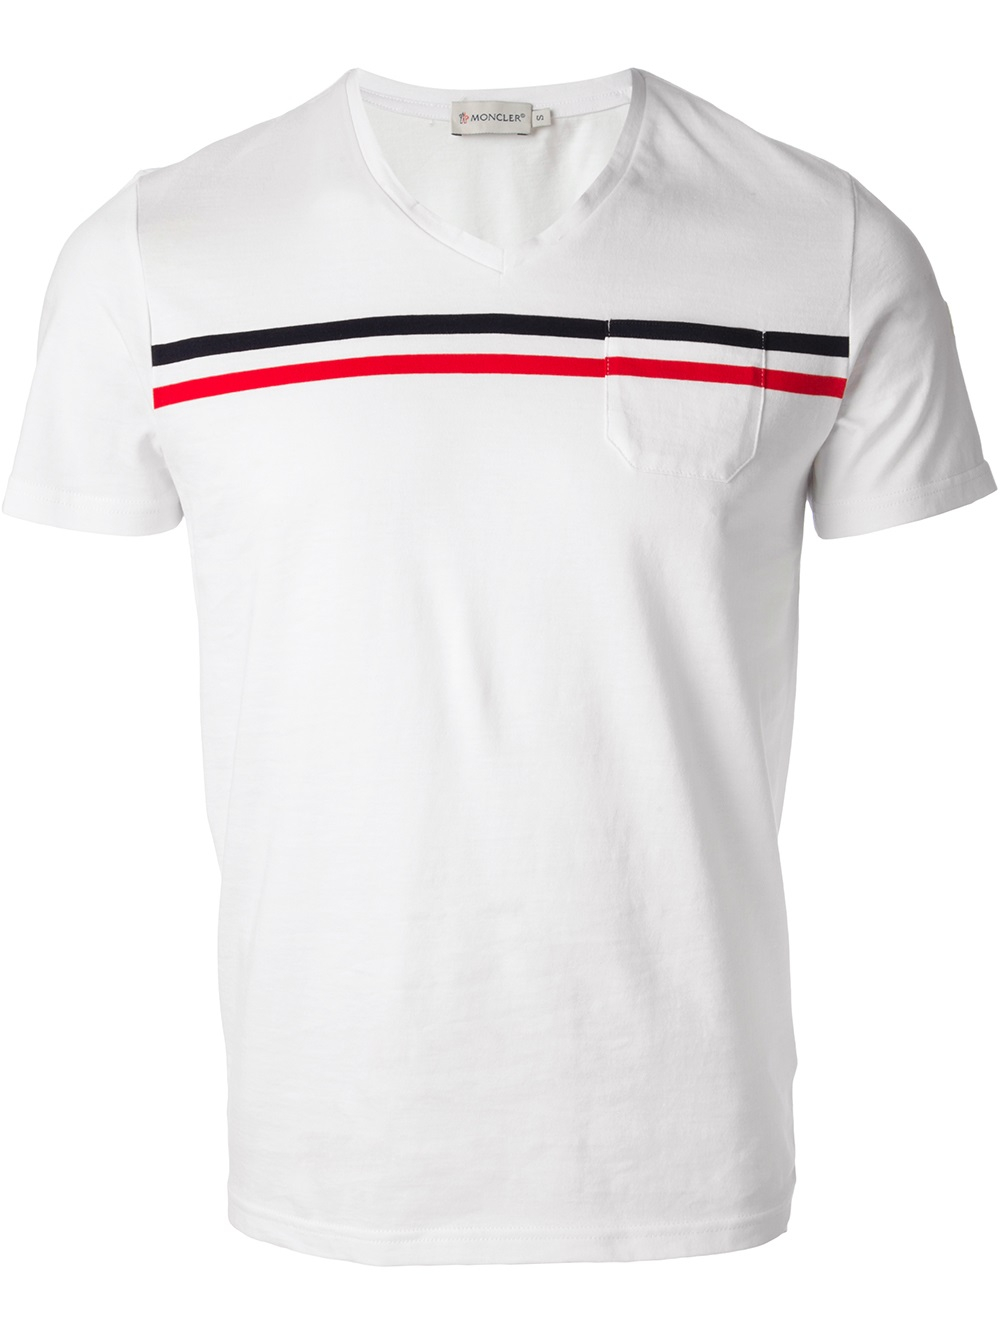 Lyst - Moncler Striped Detail T-Shirt in White for Men